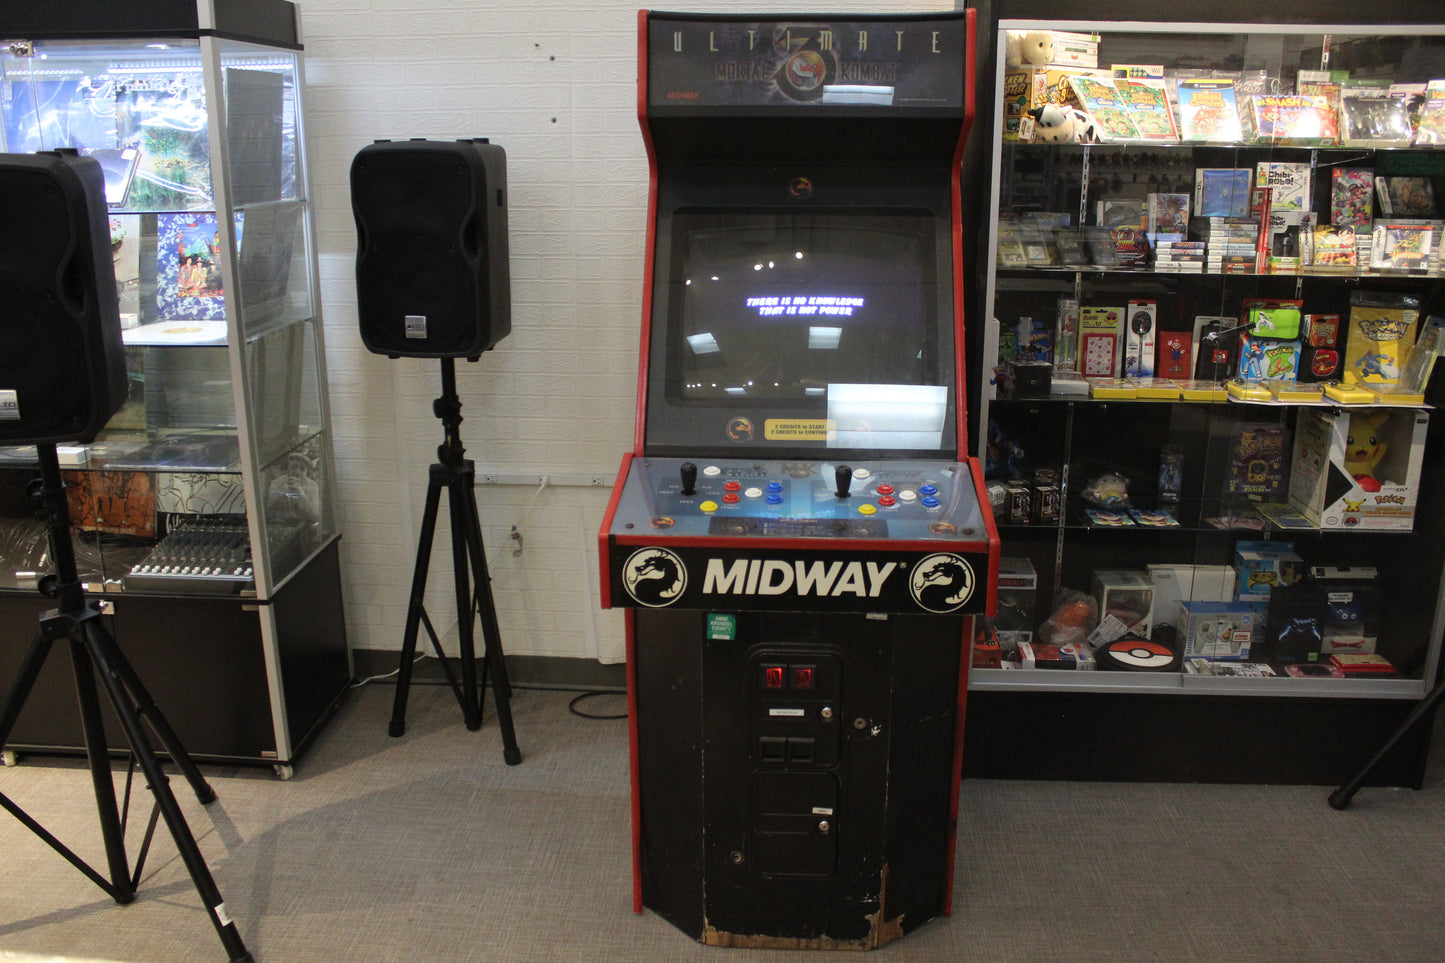 Mortal Kombat 3 Arcade by Midway